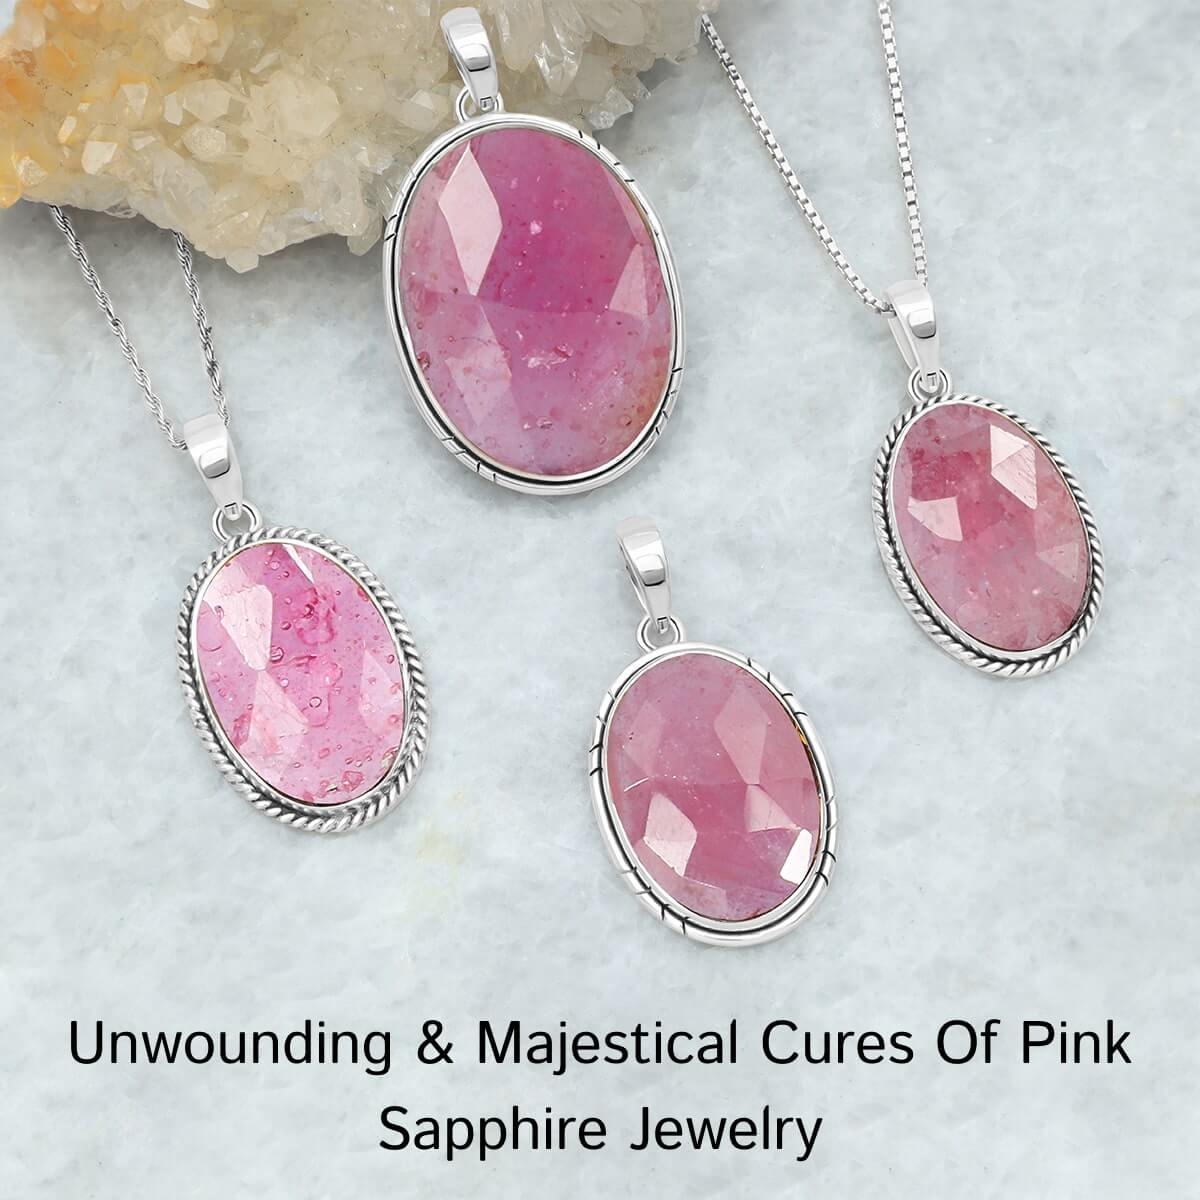 Pink Sapphire Healing Properties